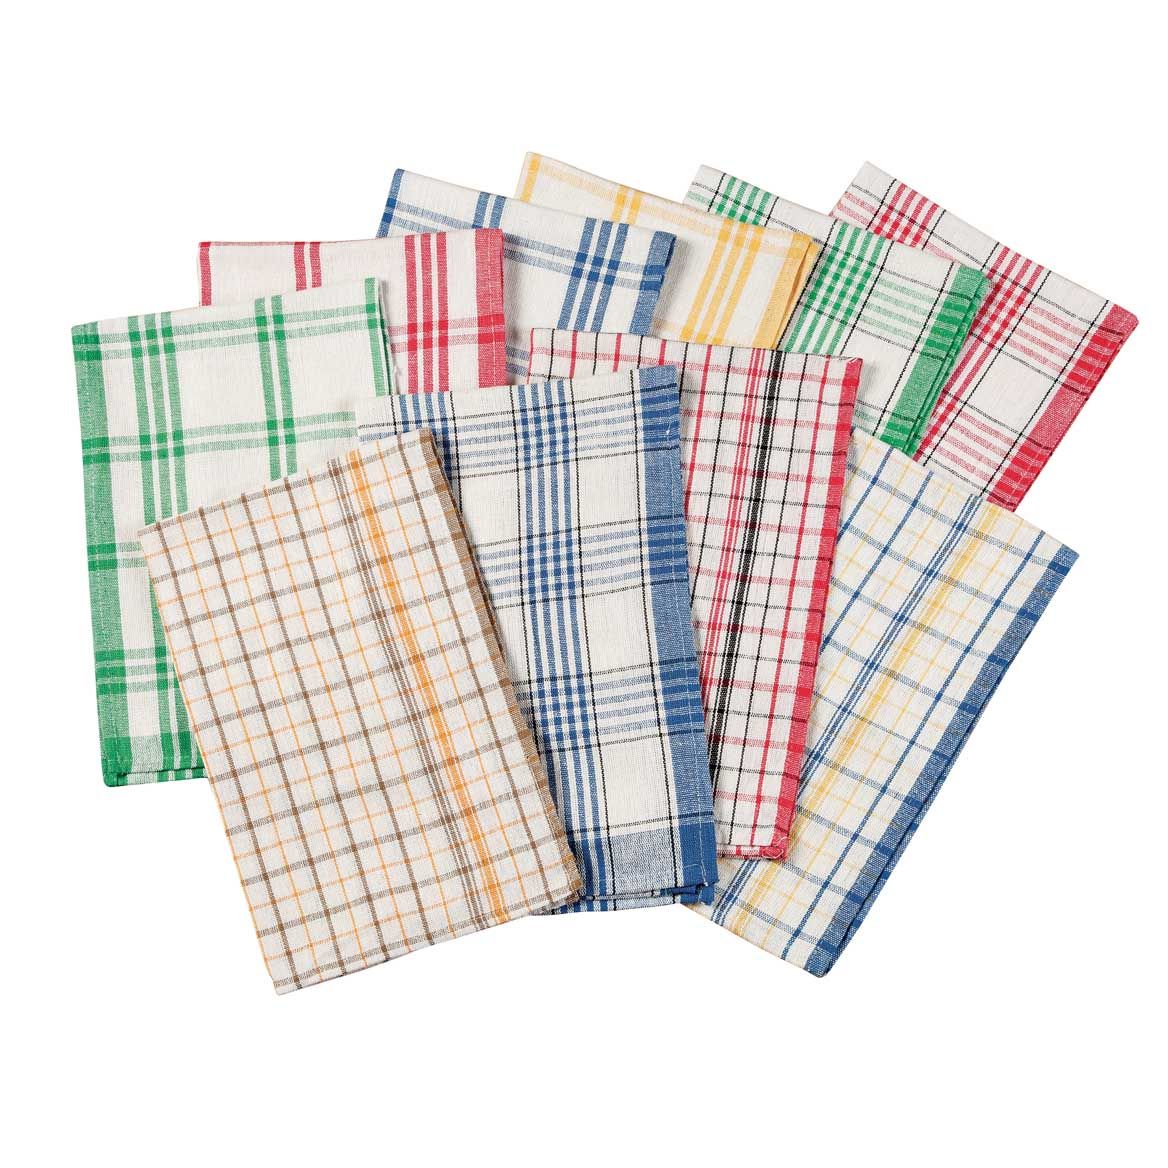 Plaid Kitchen Towels - Set of 10 + '-' + 350528